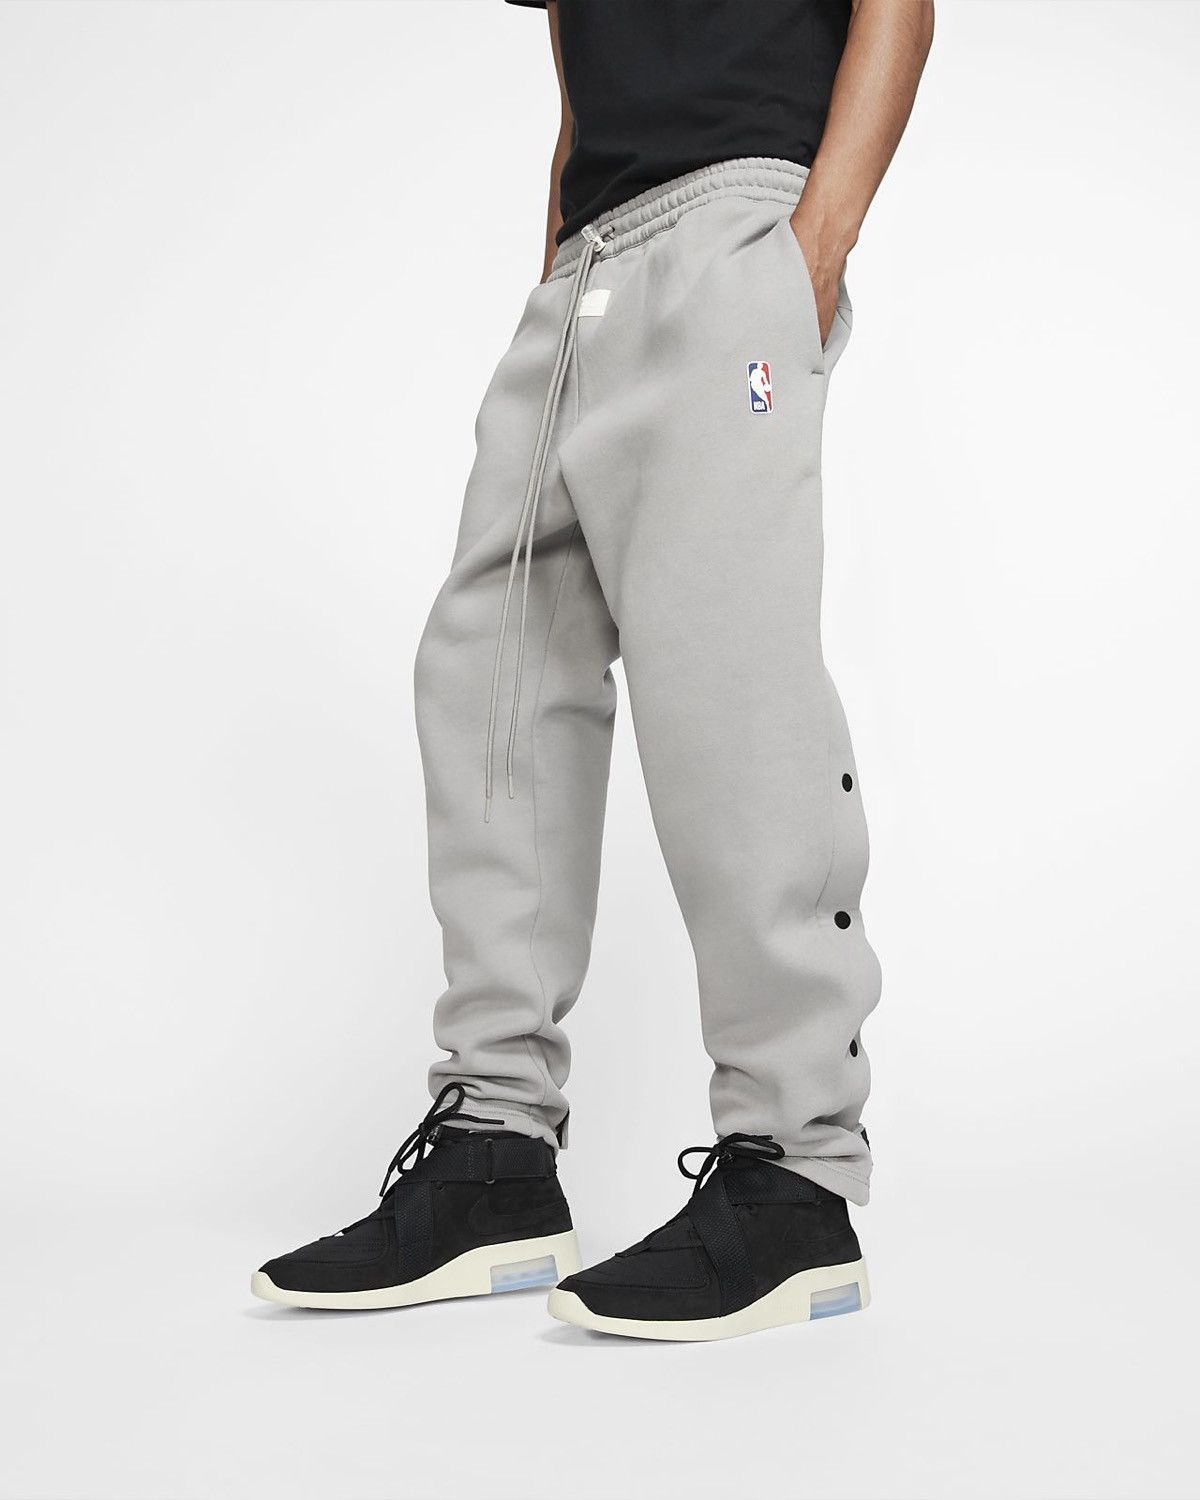 Nike Nike Fear of God Jerry Lorenzo NBA warm up pants 'String